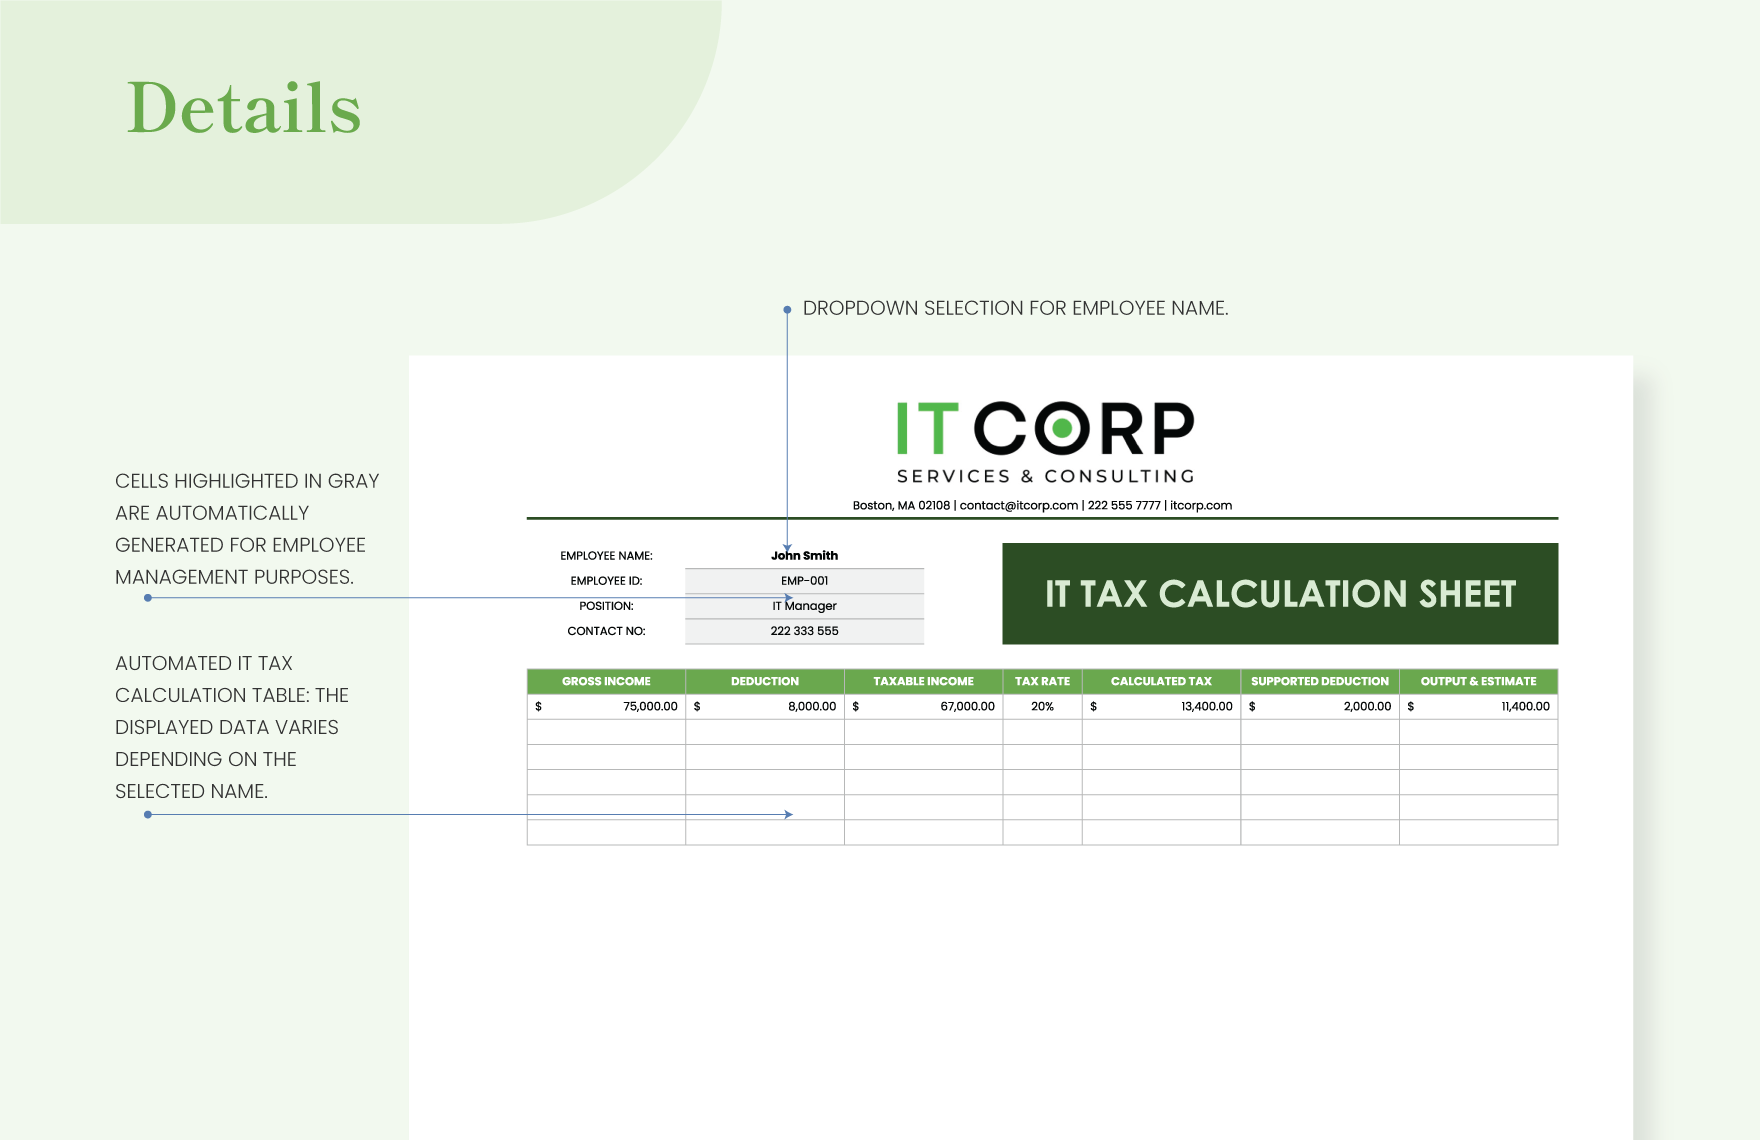 IT Tax Calculation Sheet Template